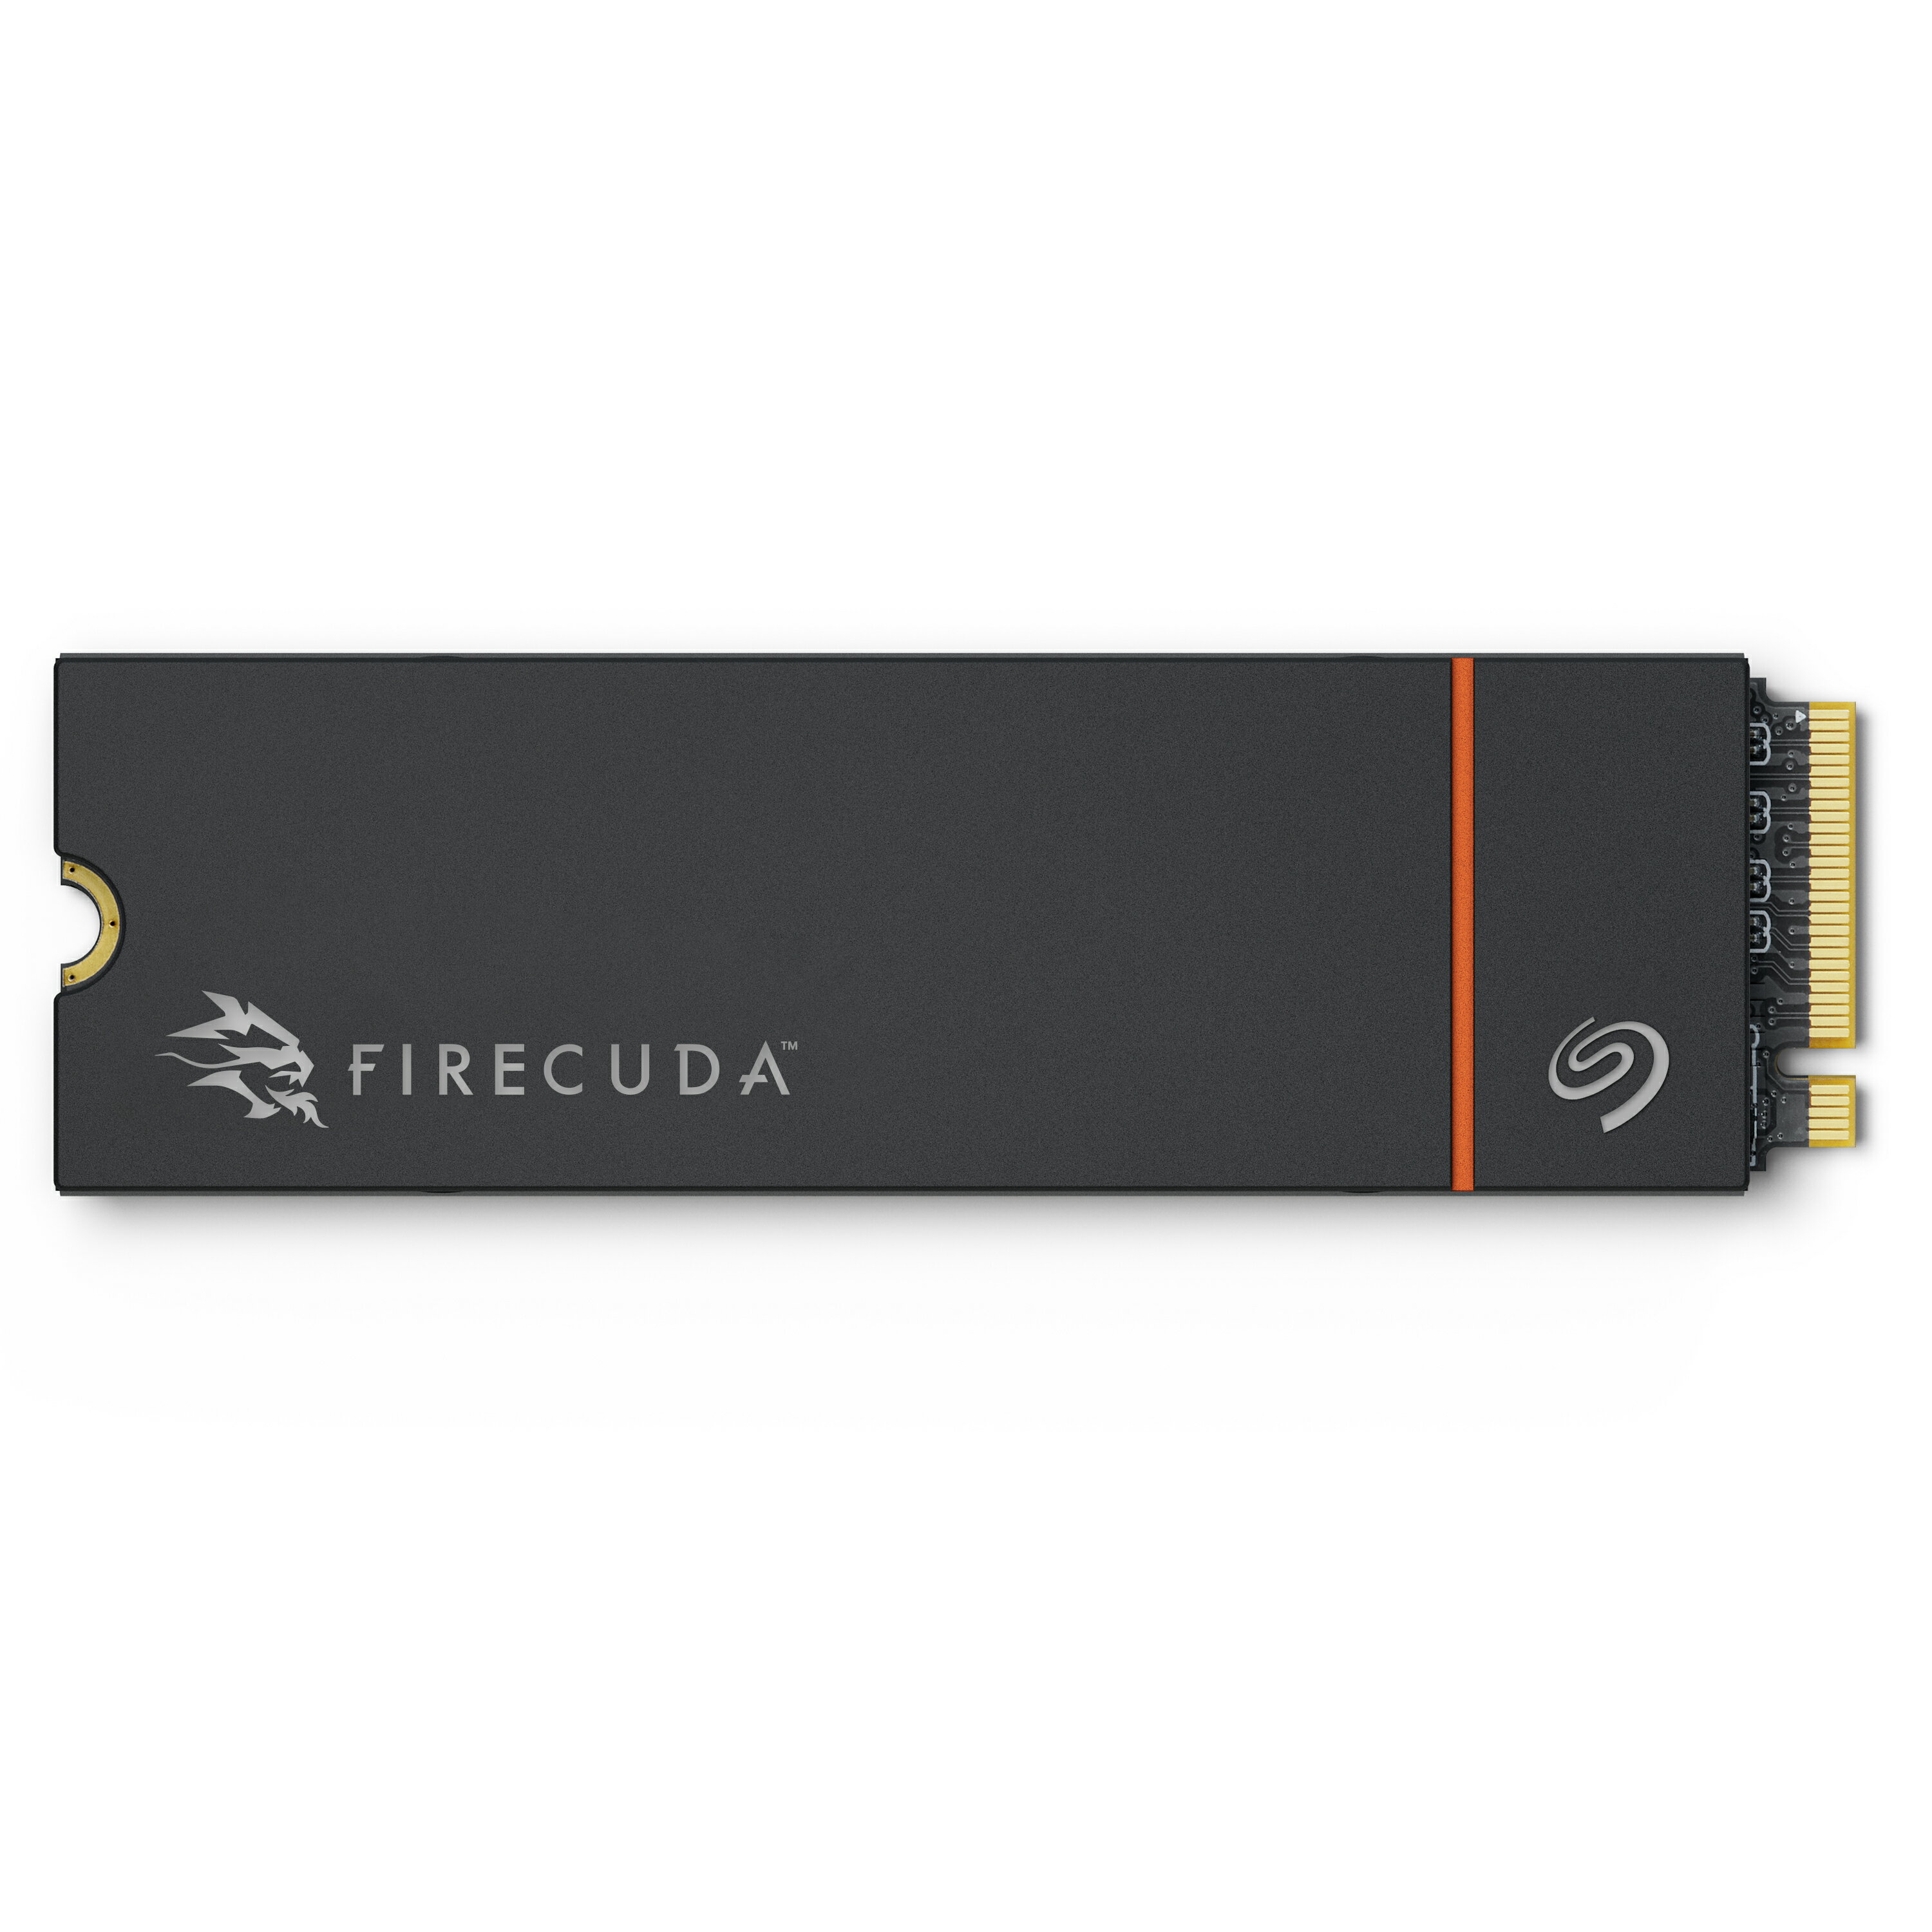 Seagate シーゲイト FireCuda 530 M.2 内蔵 SSD ヒートシンク付き  4TB PCIe Gen4 x4 読取速度 7250MB/s 5年保証 データ復旧 3年付 正規代理店 ZP4000GM3A023